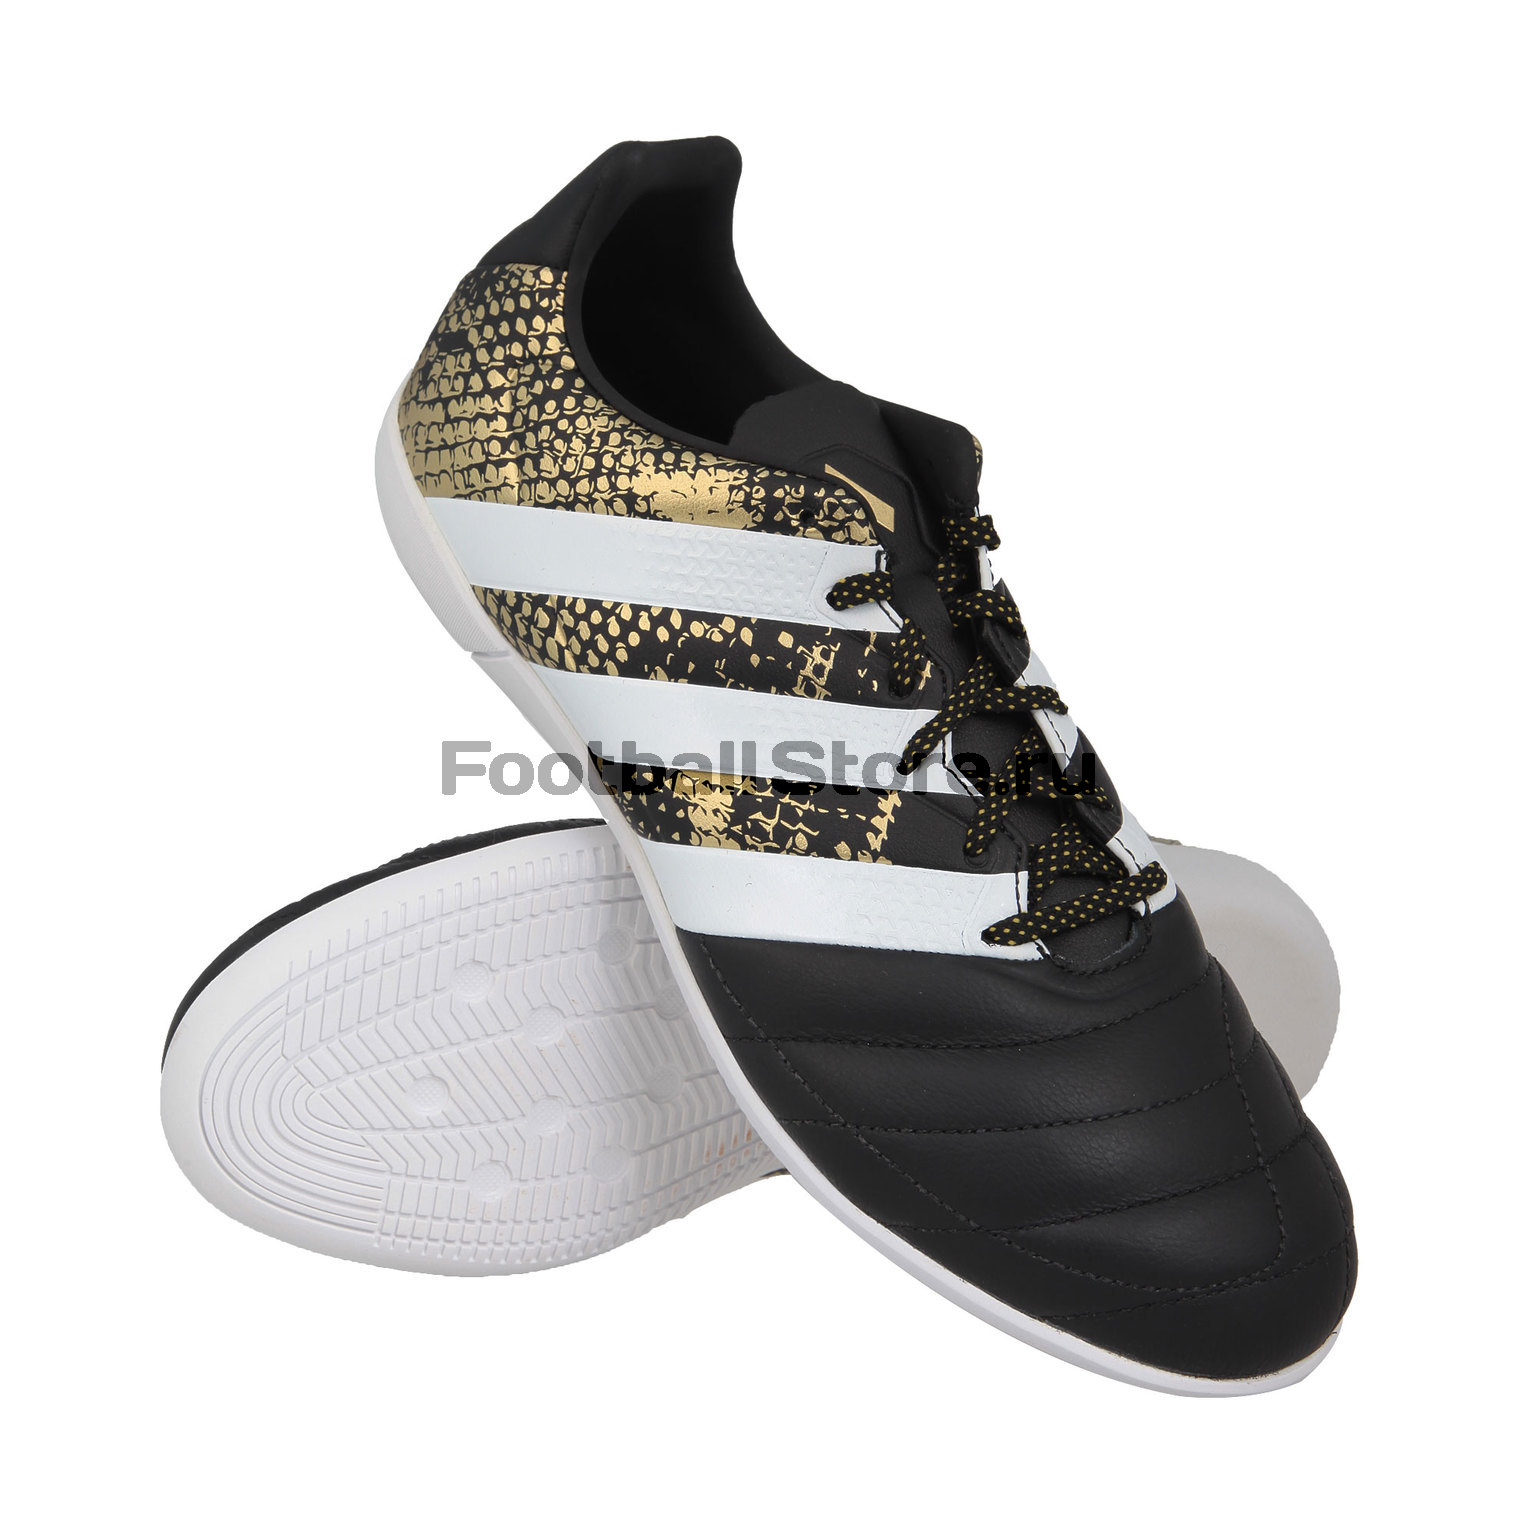 Обувь для зала Adidas Ace 16.3 IN Leather S76563